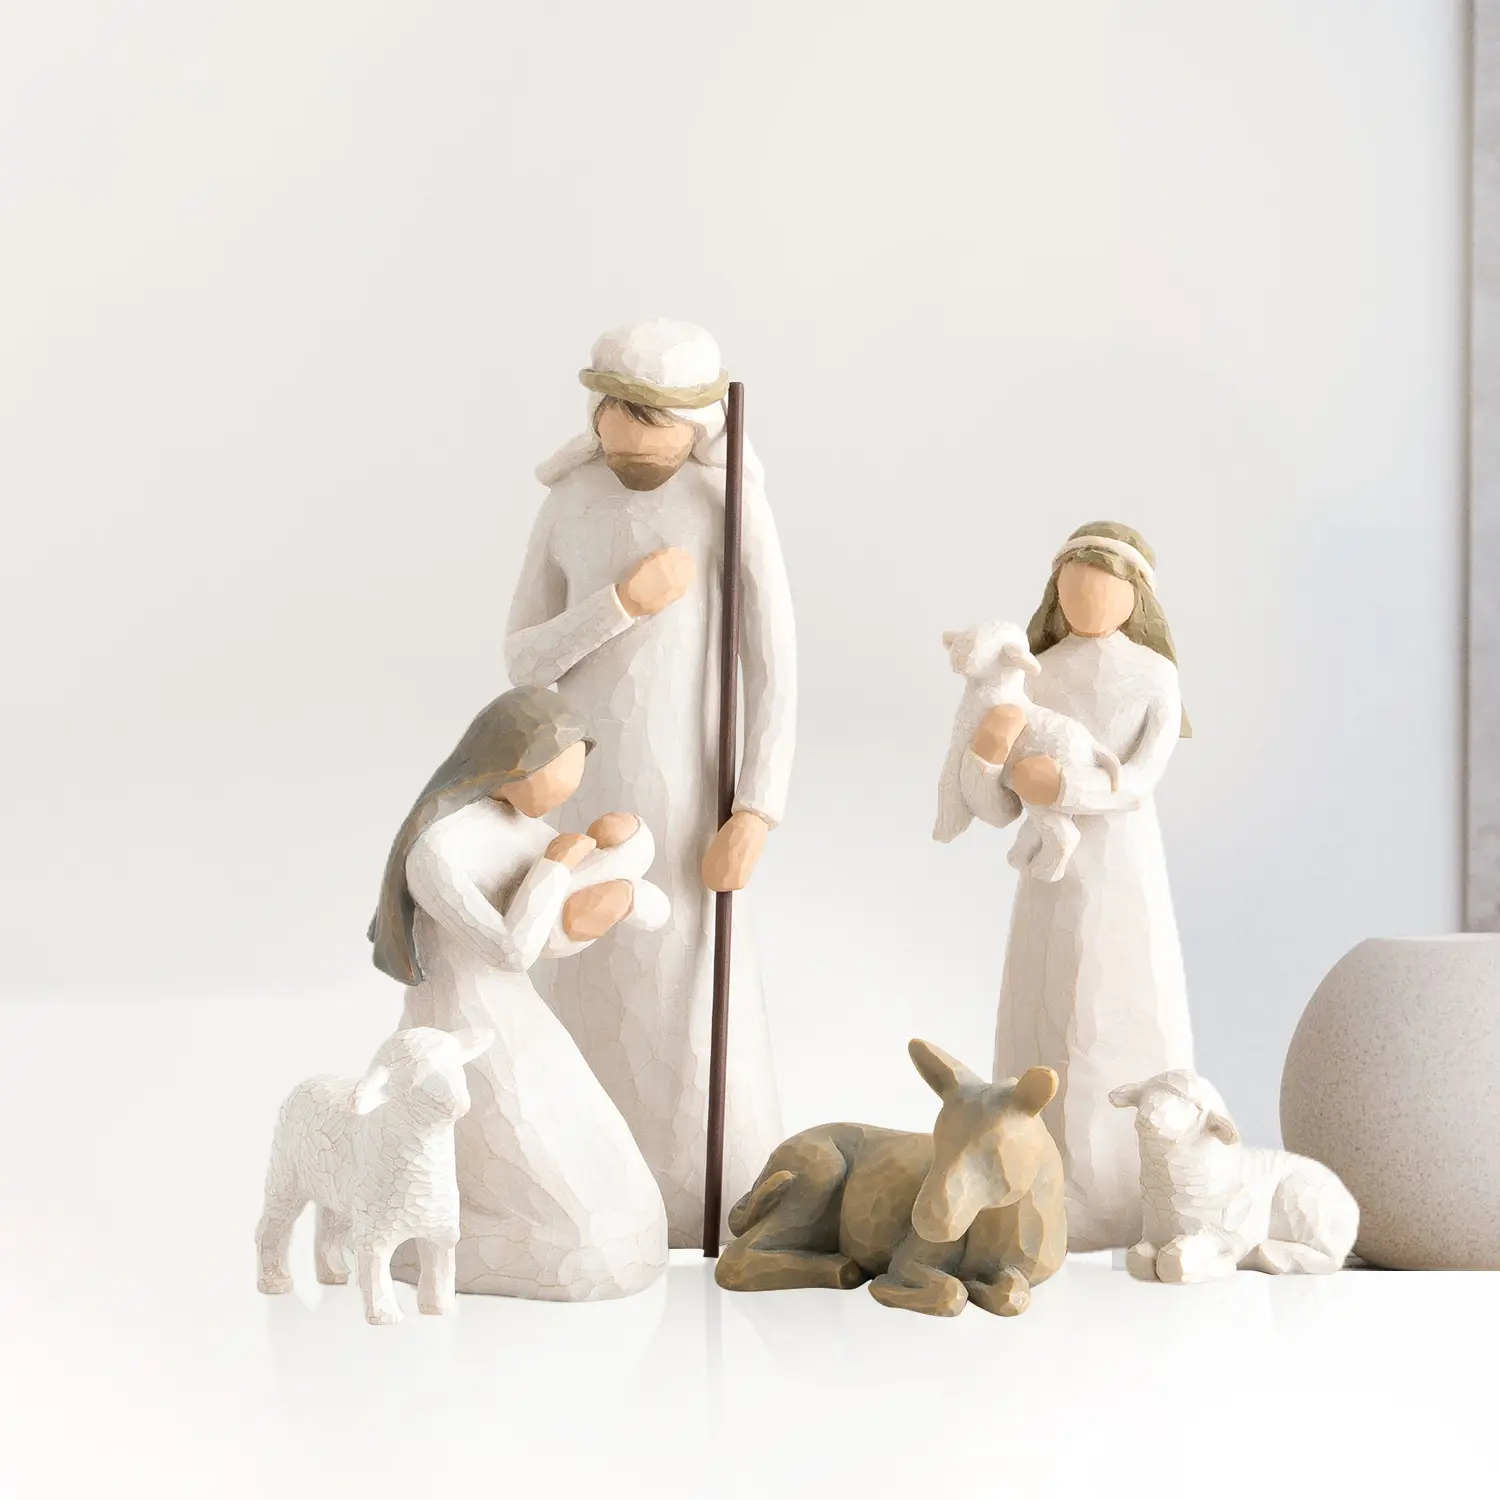 Wholesale hand painted white nativity series resin ornaments 6pcs set creative sculpture home desktop decoration resin crafts